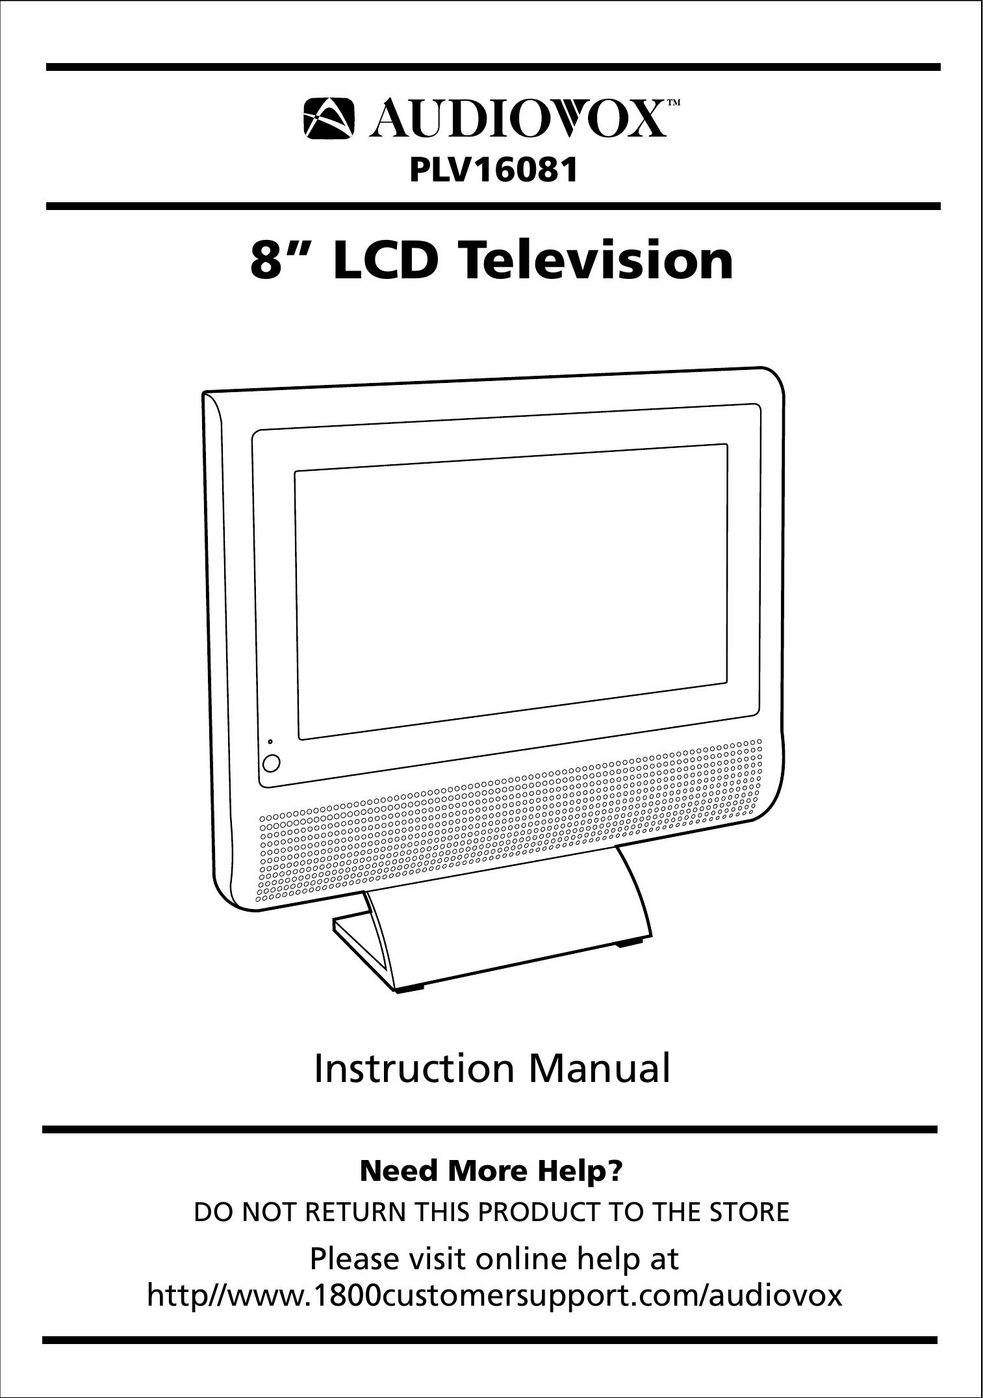 Audiovox PLV16081 Flat Panel Television User Manual